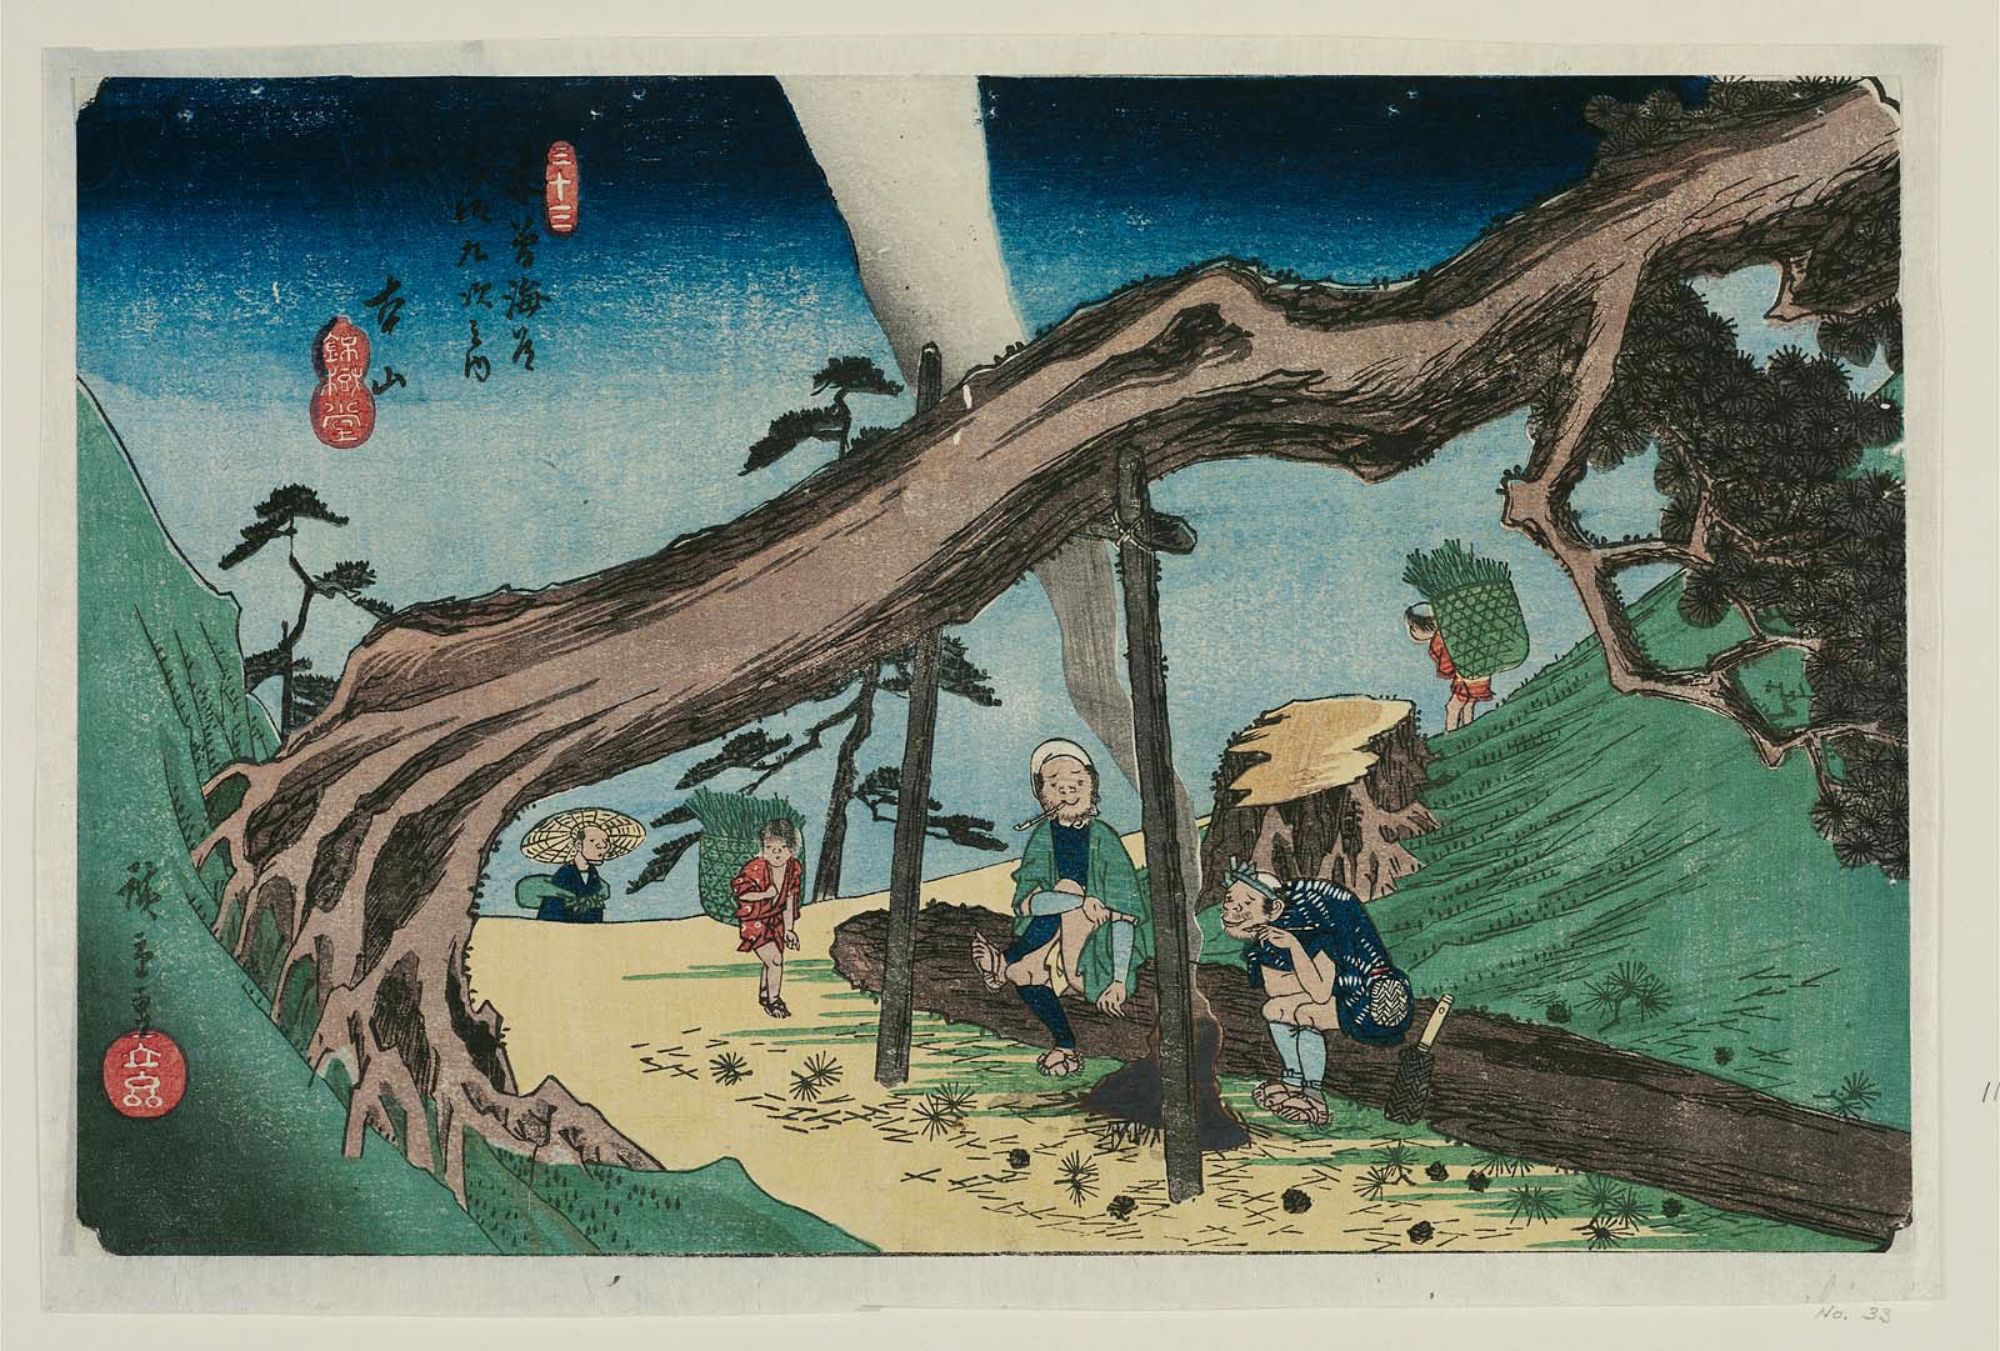 Utagawa Hiroshige: No. 33, Motoyama, from the series The Sixty 